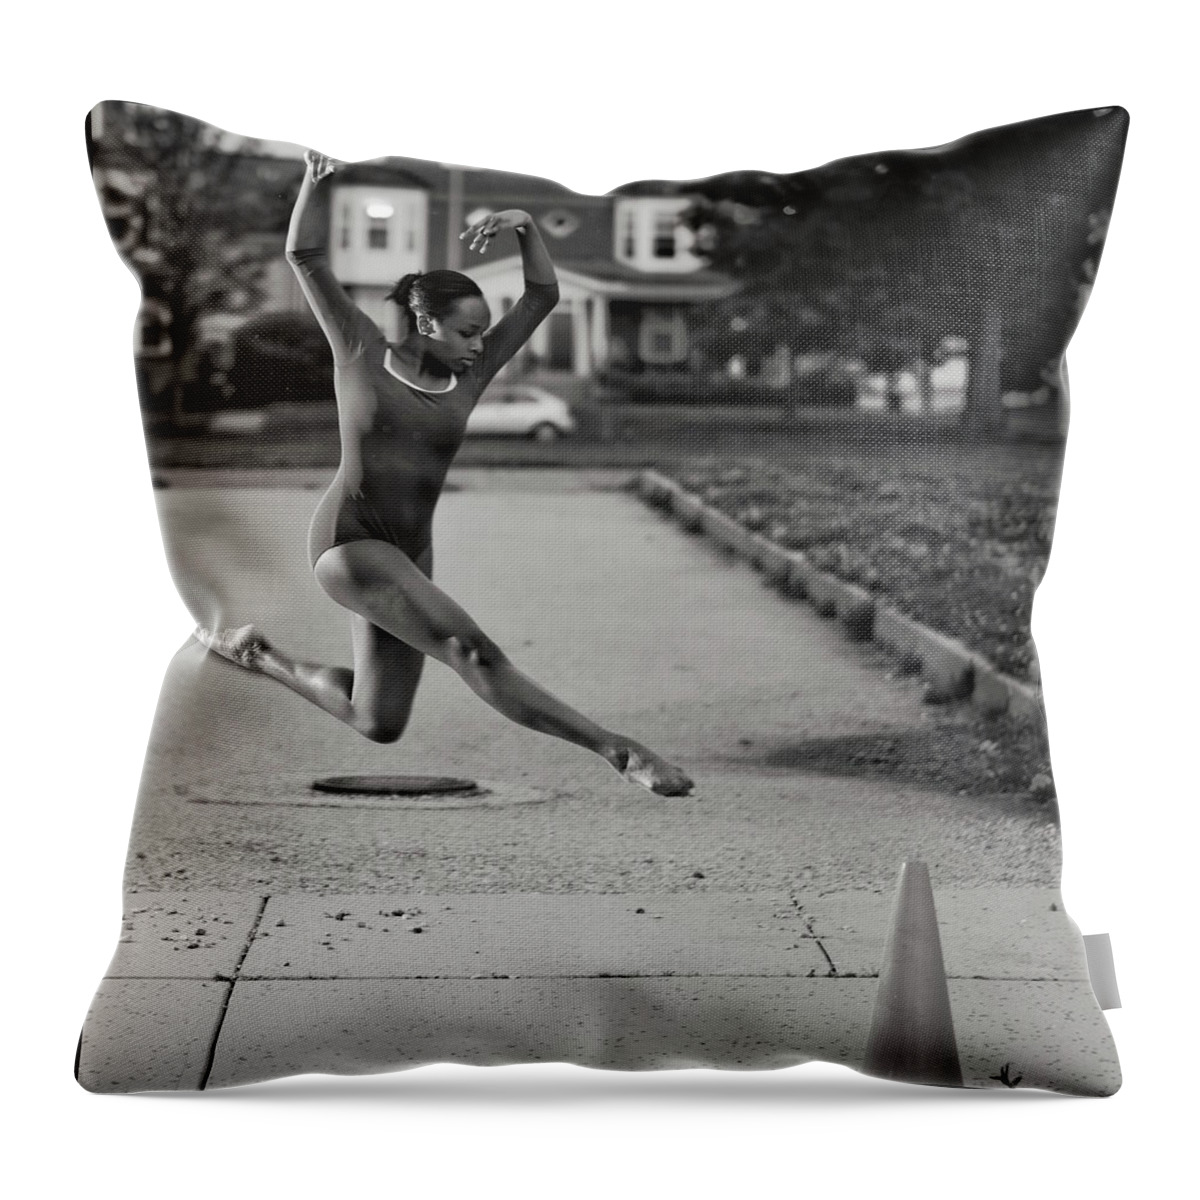  Throw Pillow featuring the photograph Ballet Dancer by Al Harden